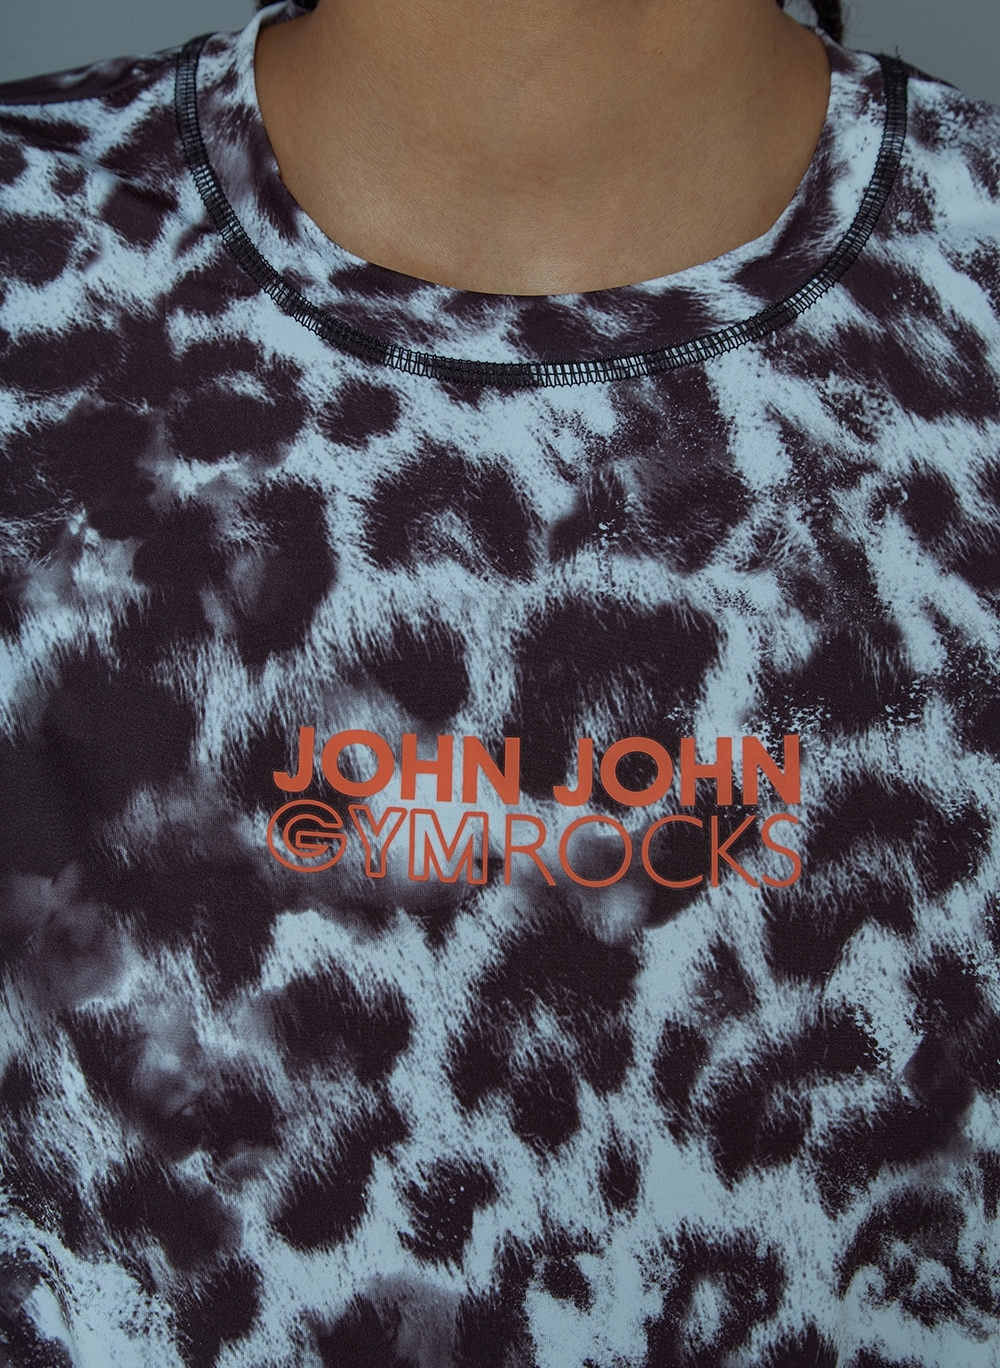 Camiseta John John Mix Feminina 03.62.0213 - Camiseta John John